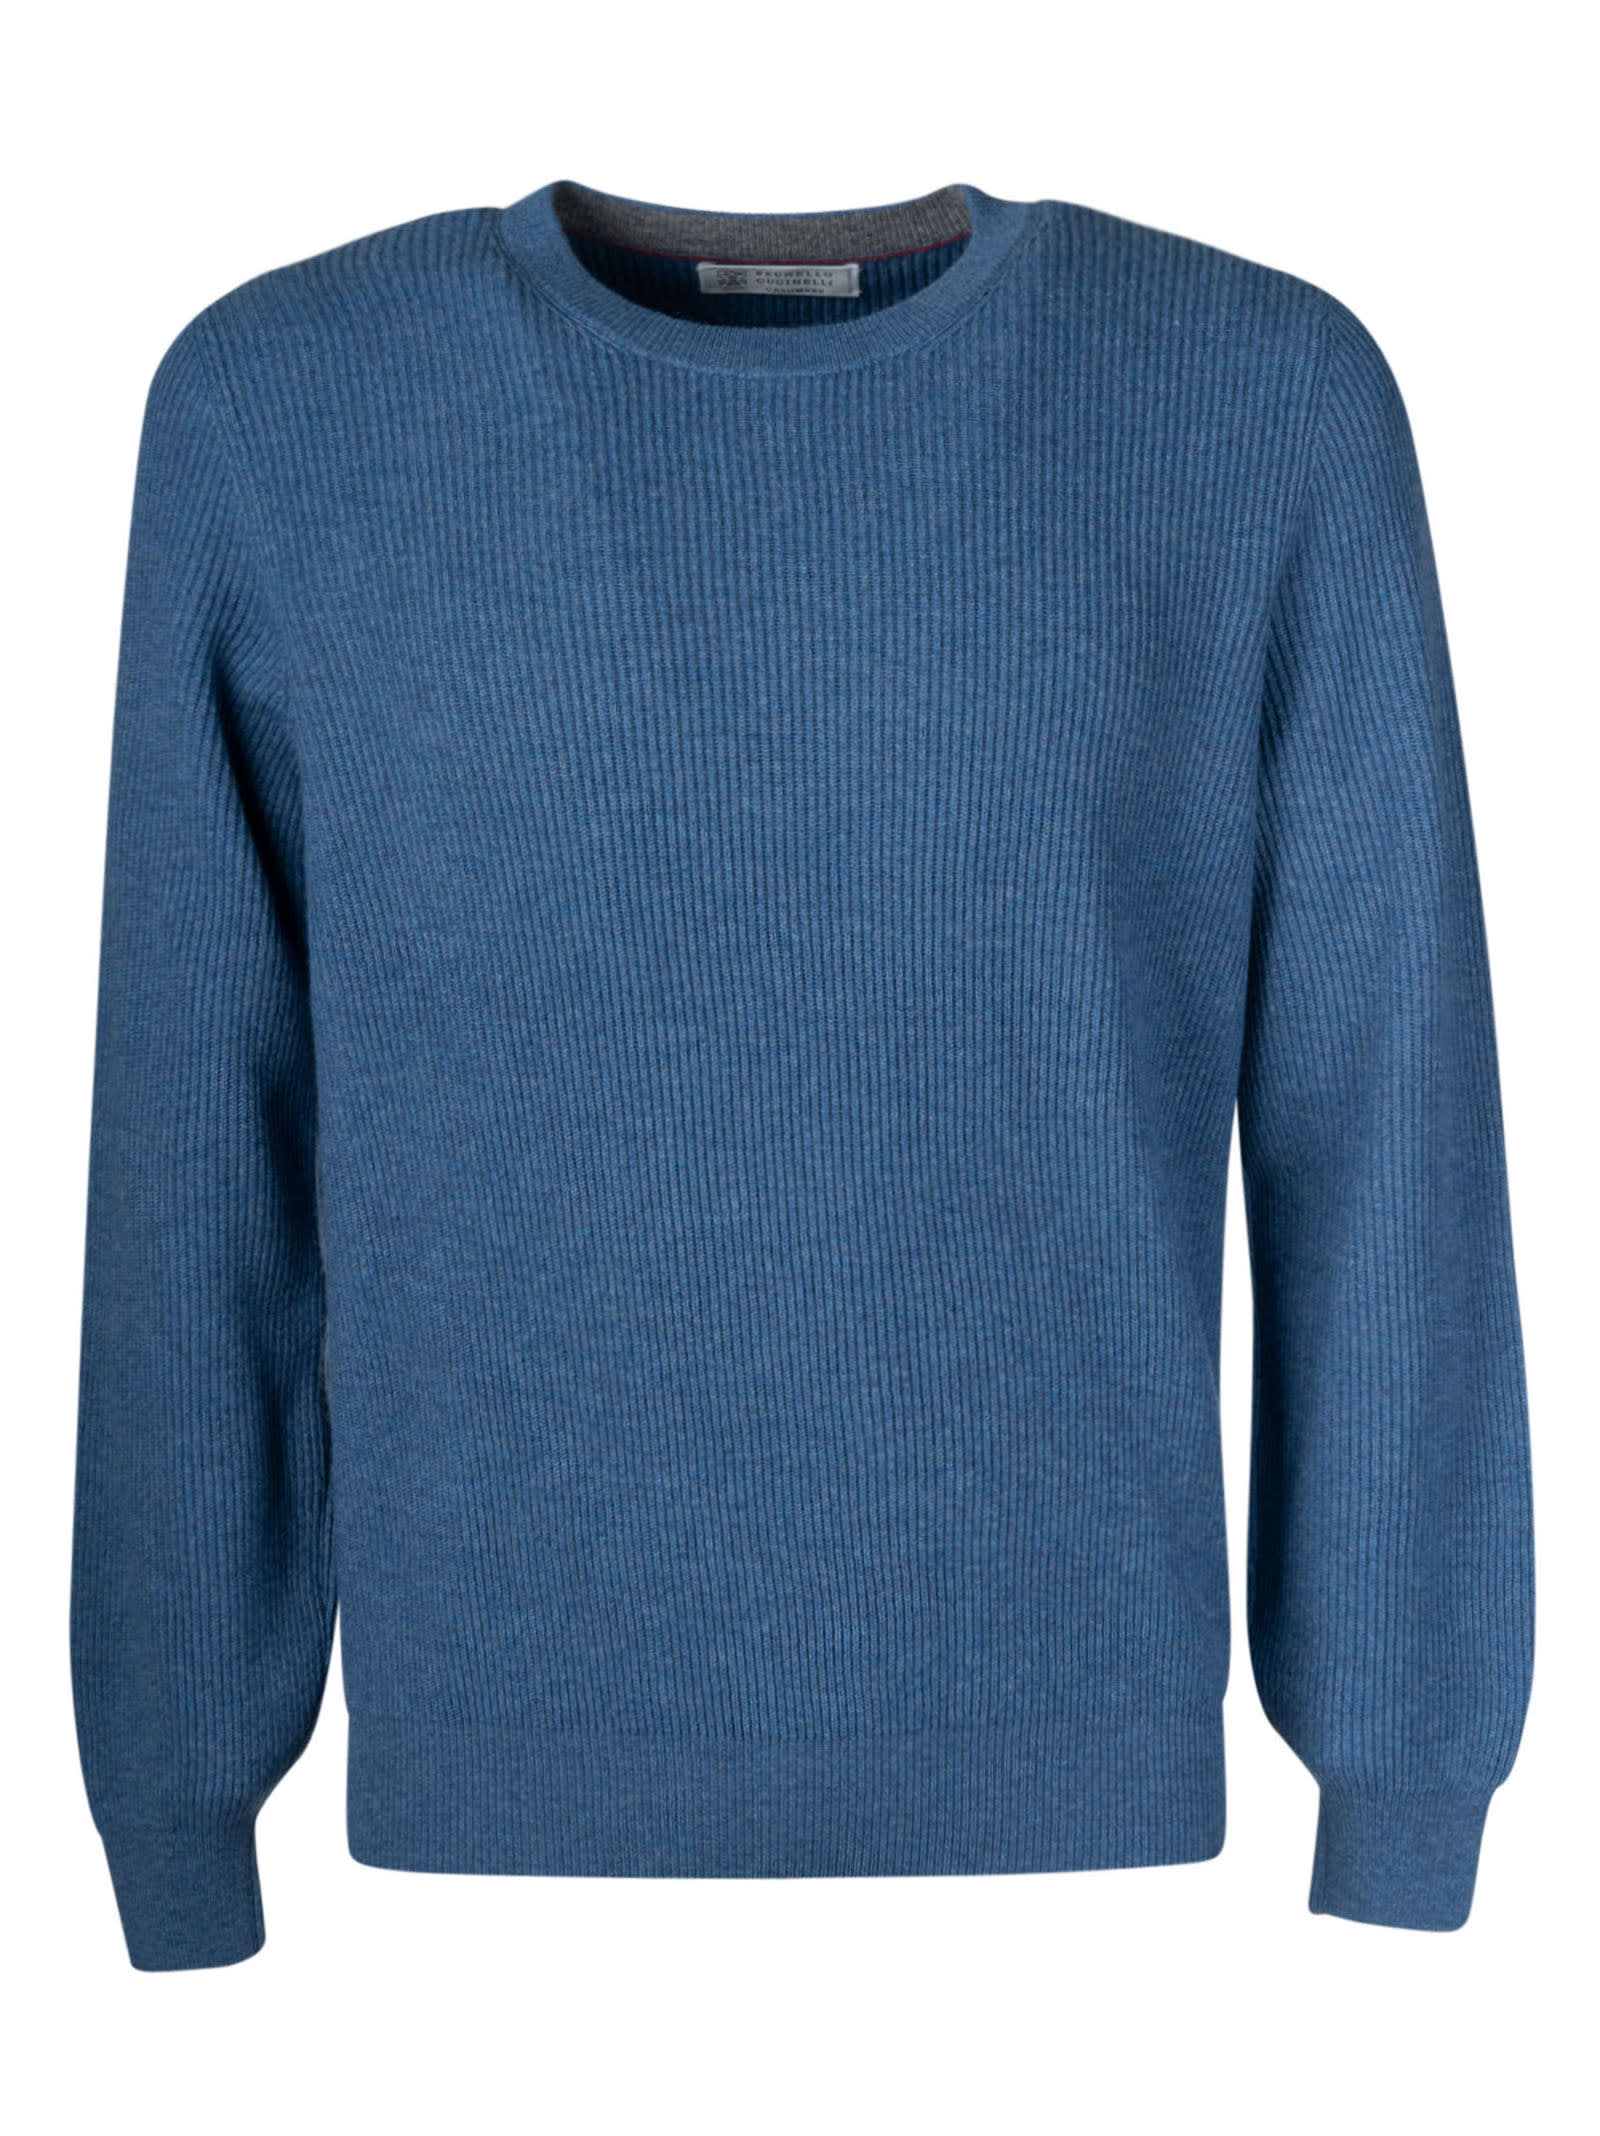 Brunello Cucinelli Ribbed Knit Plain Sweater